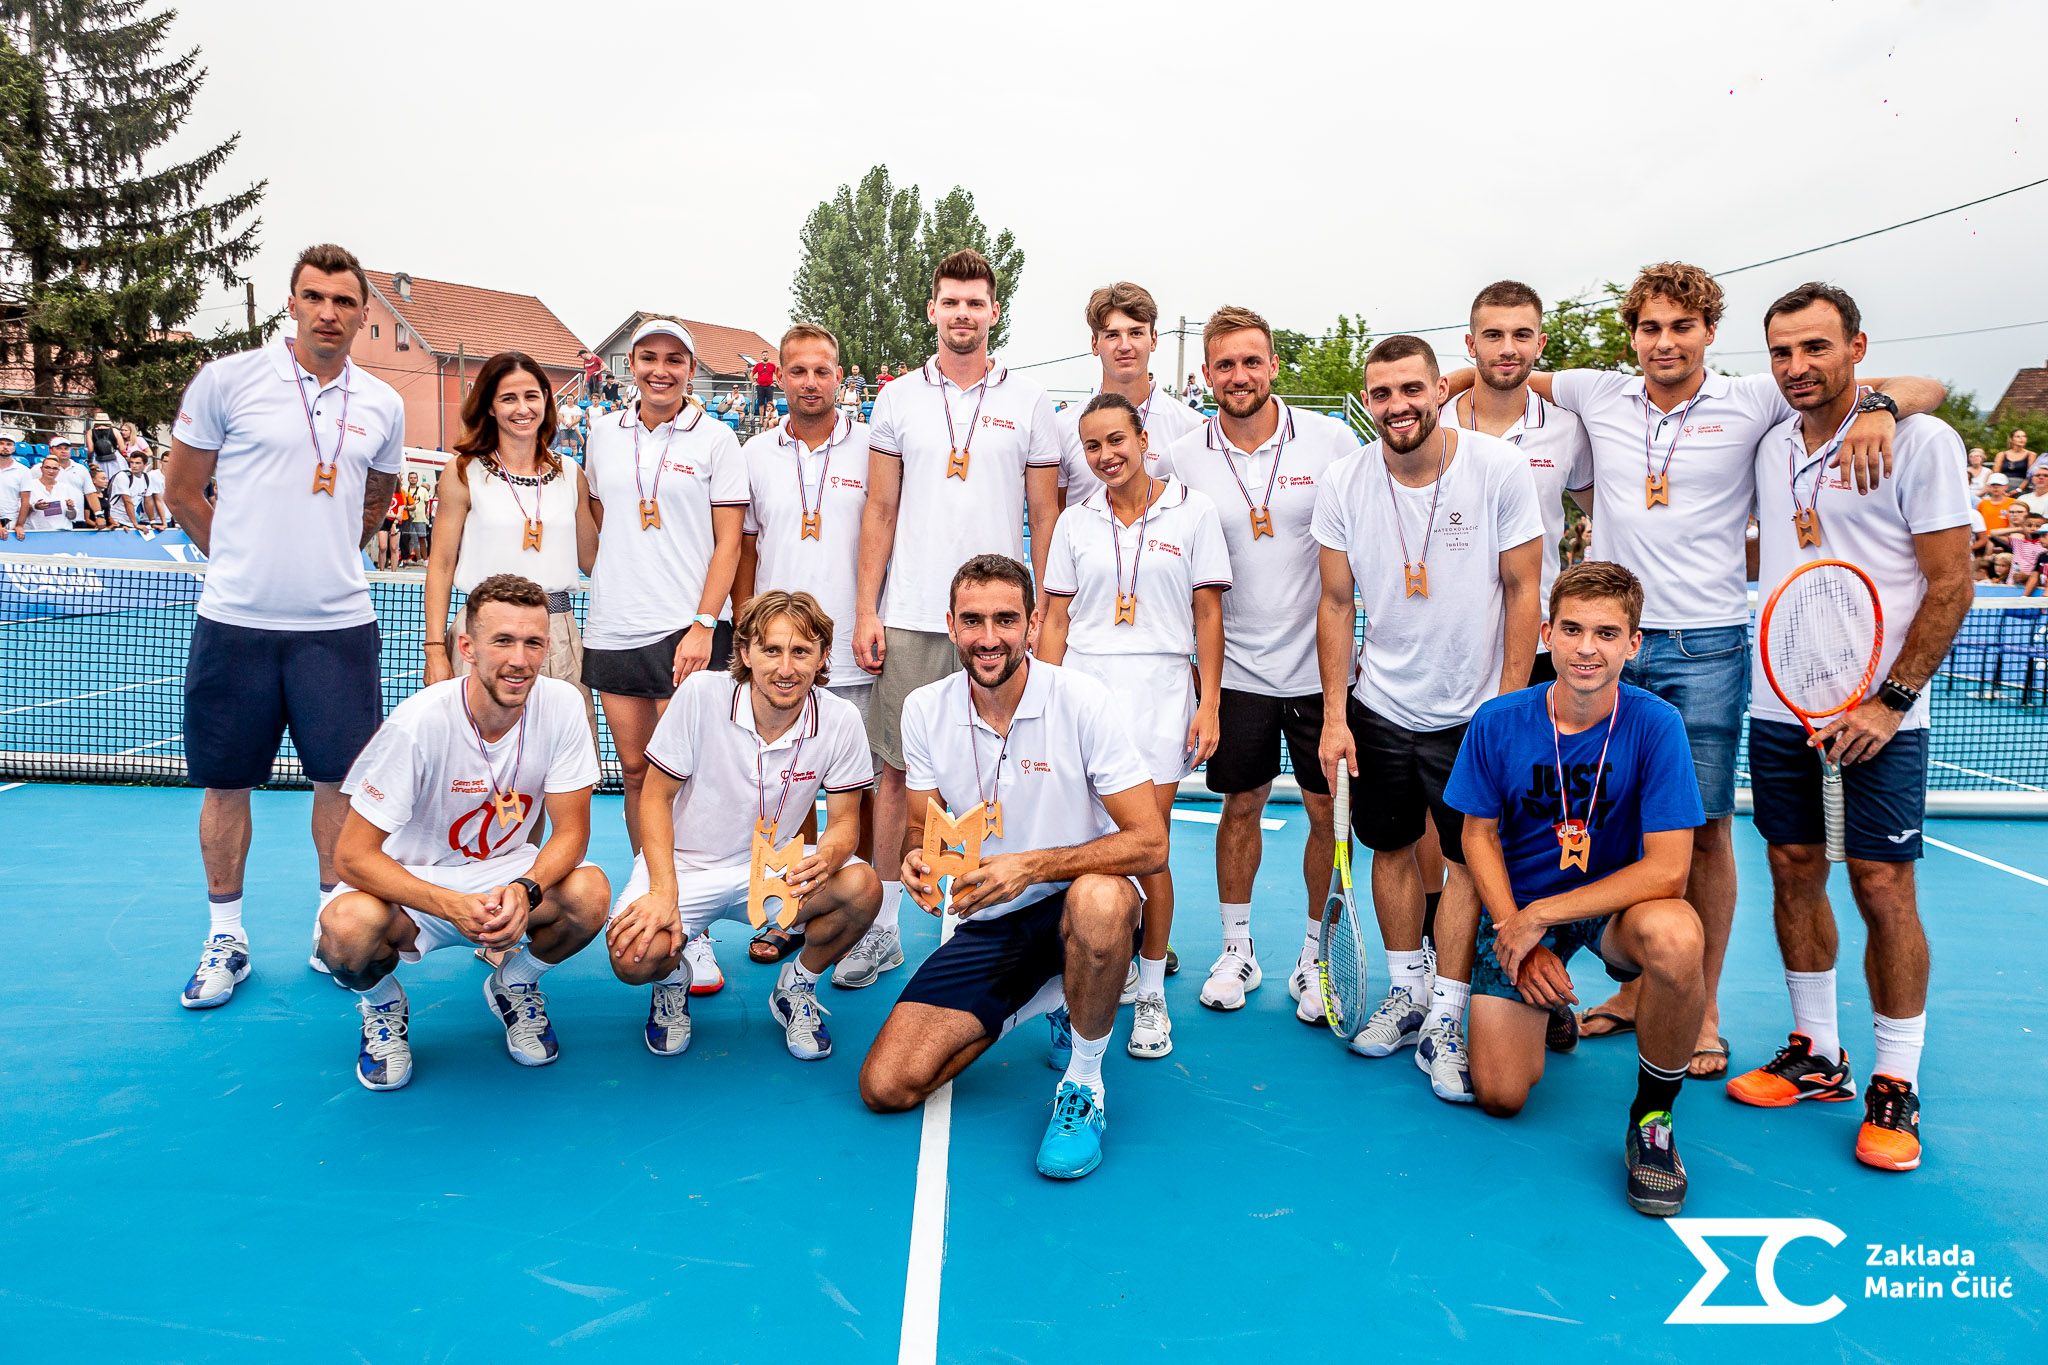 Modrić and Čilić win as Croatia's sport stars gather for charity tennis  tournament | Croatia Week